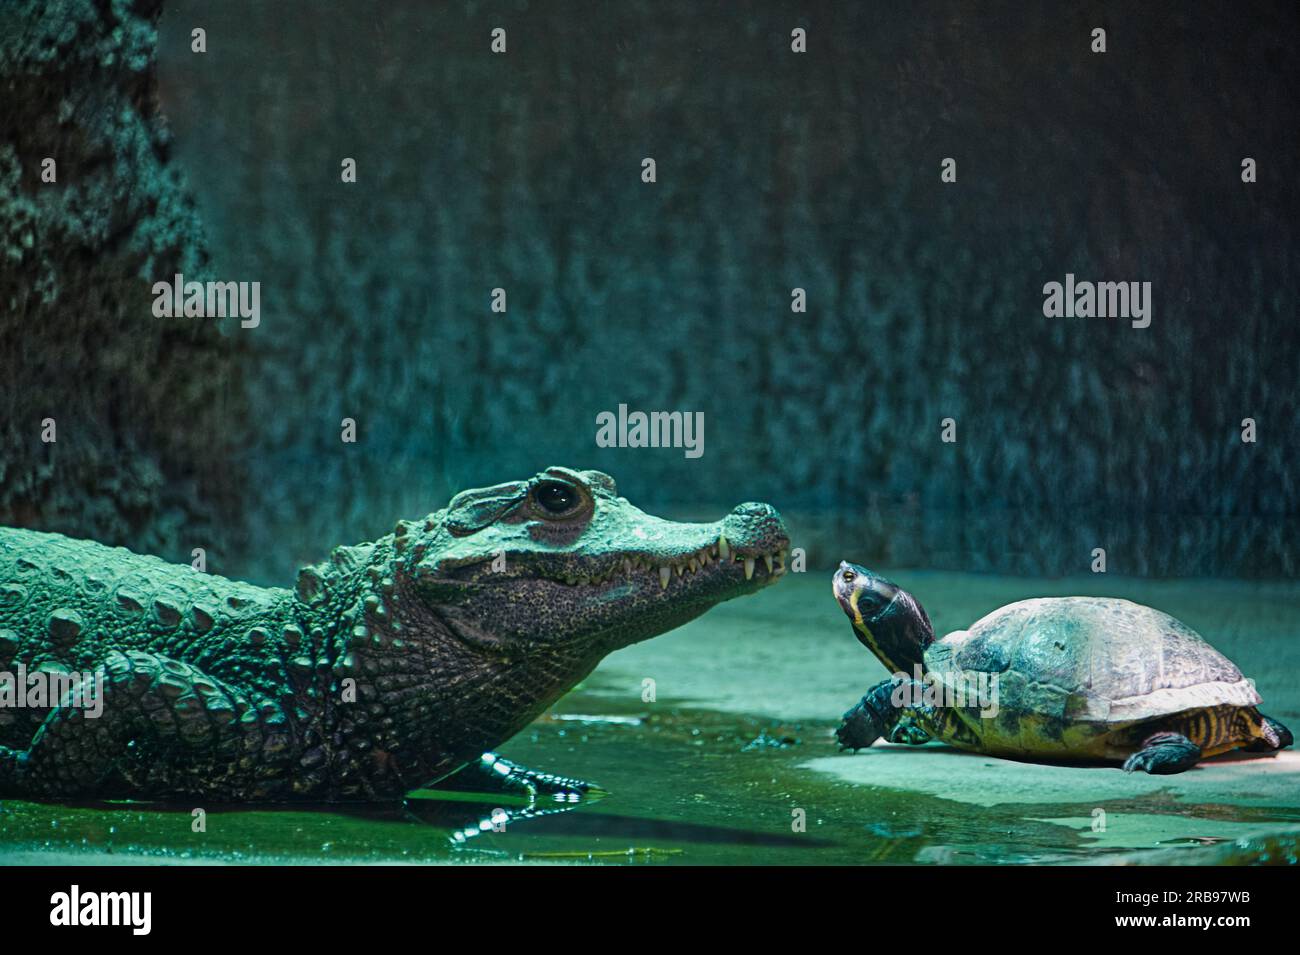 Encounter of a dwarf crocodile and a sea turtle against a dark background Stock Photo